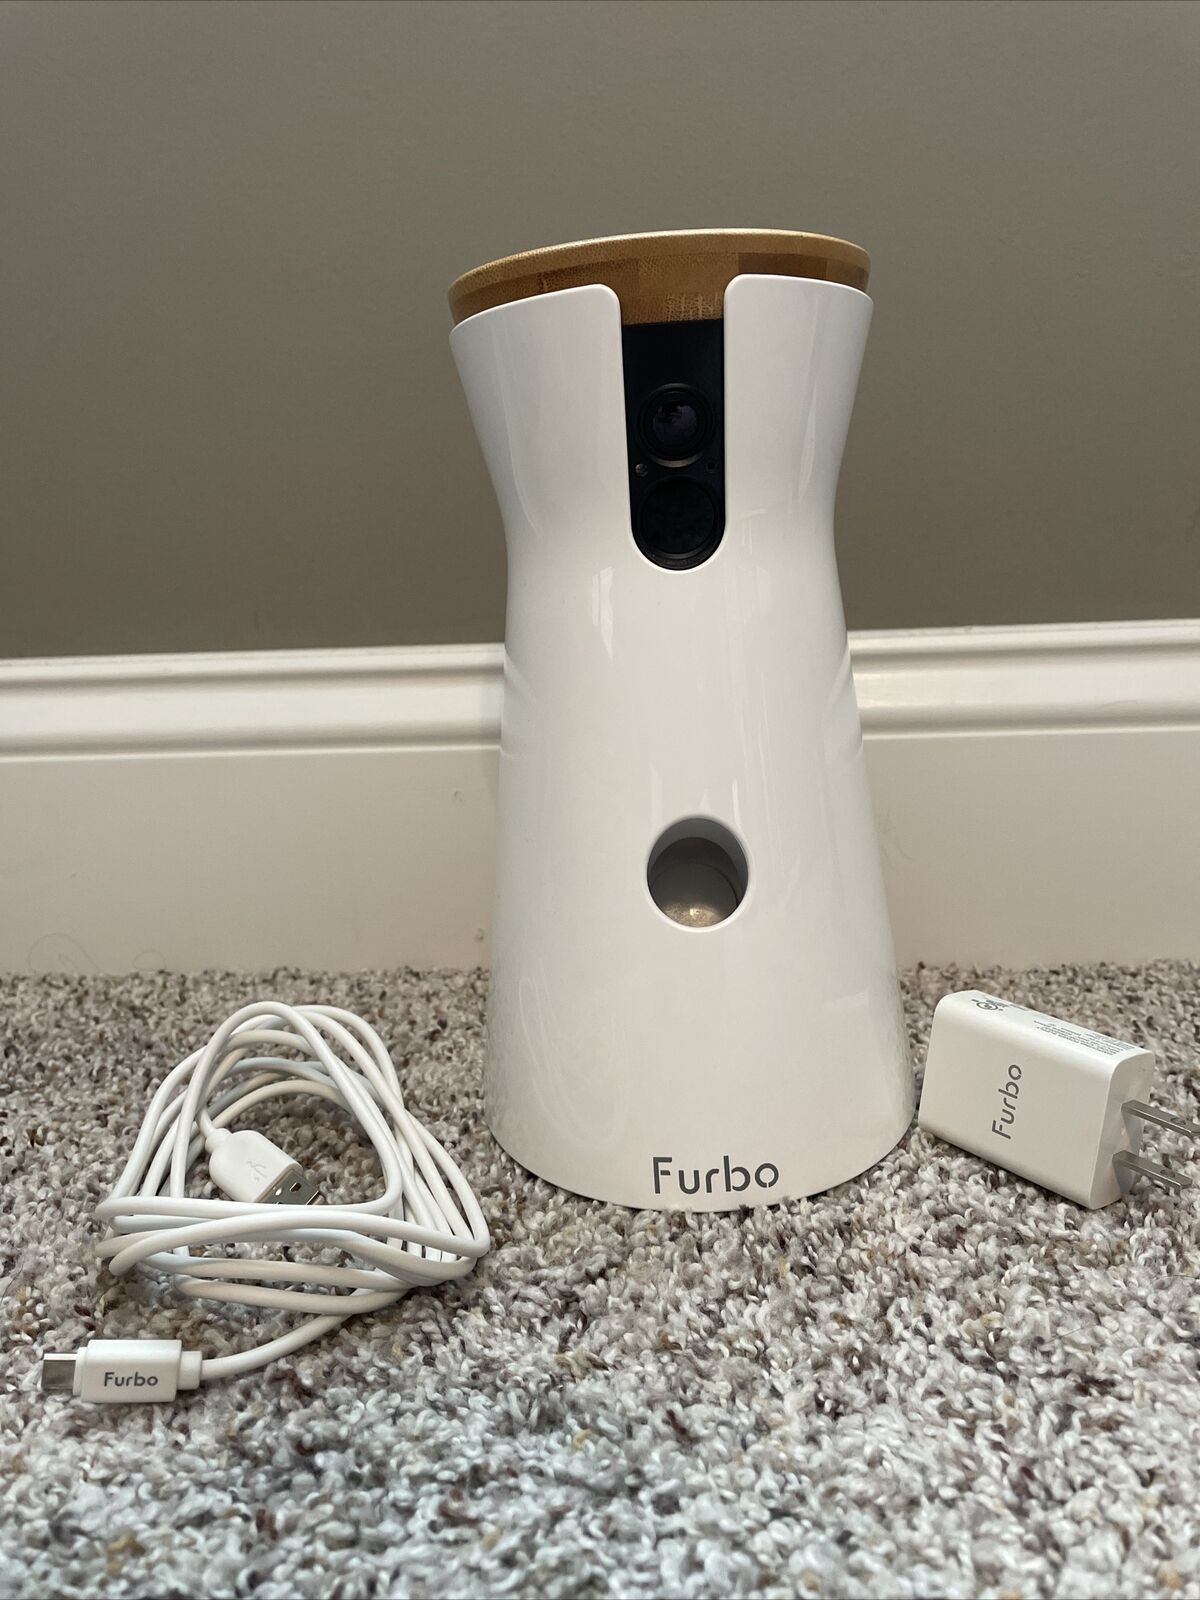 Furbo Dog Camera: Treat Tossing, Live HD Video 2 Way Audio